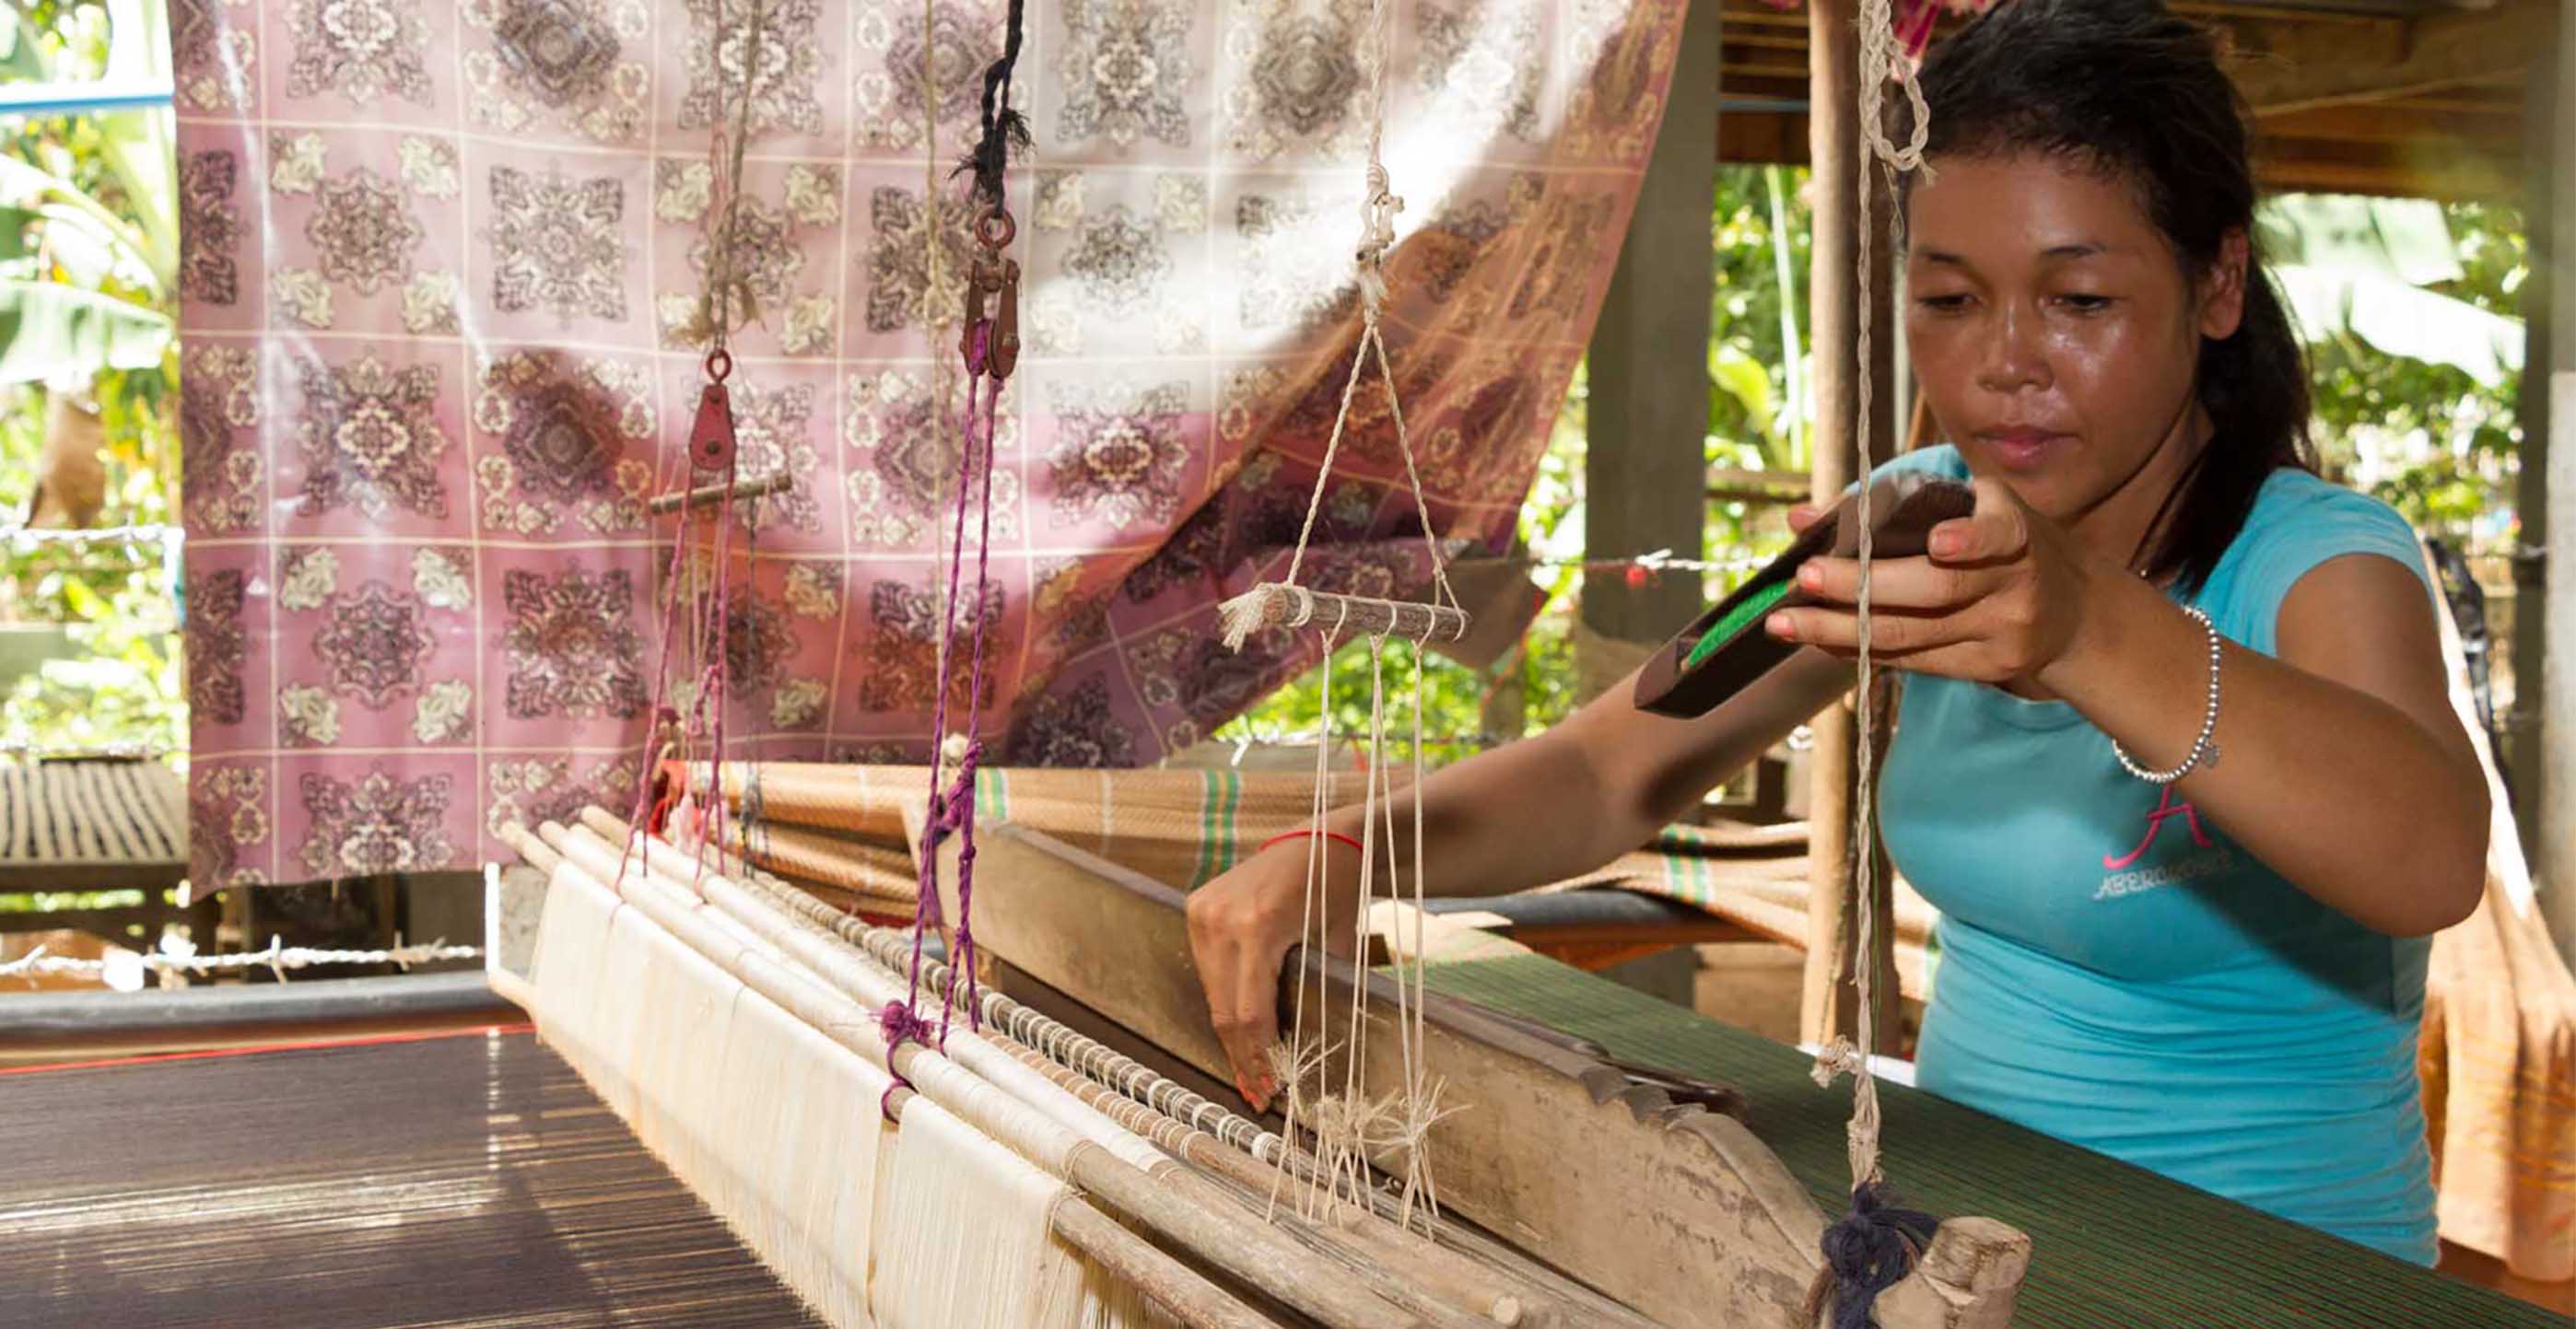 Silk business in Cambodia: Struggles to survive